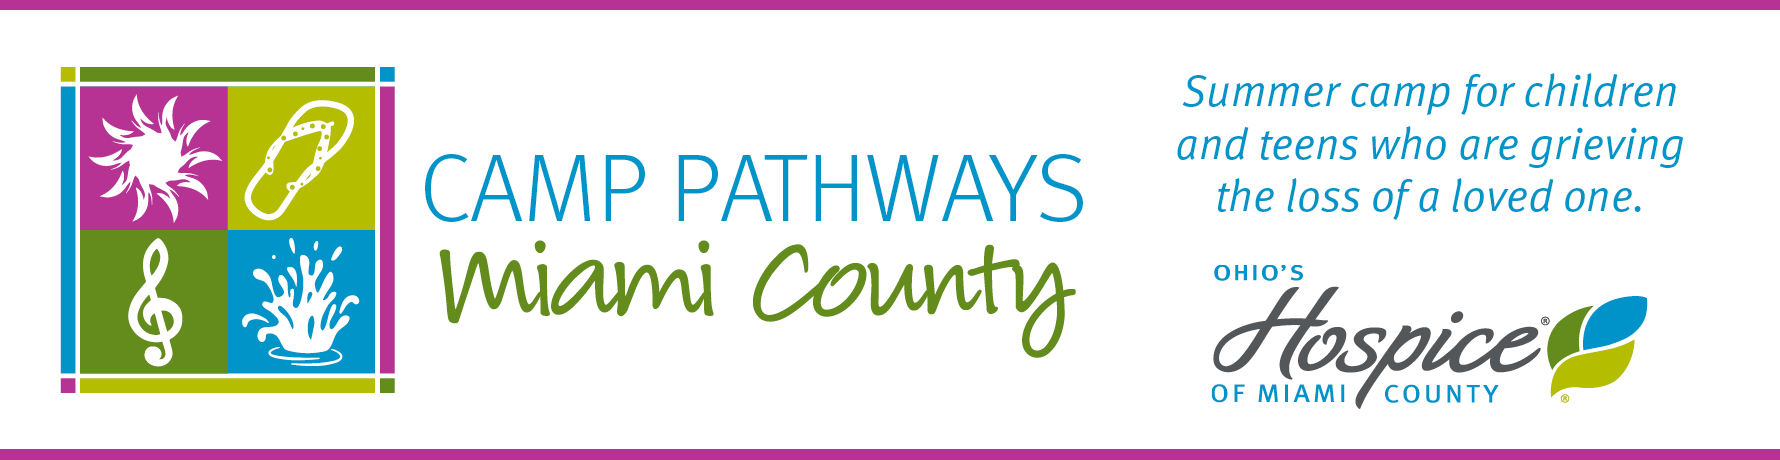 Camp Pathways: Miami County